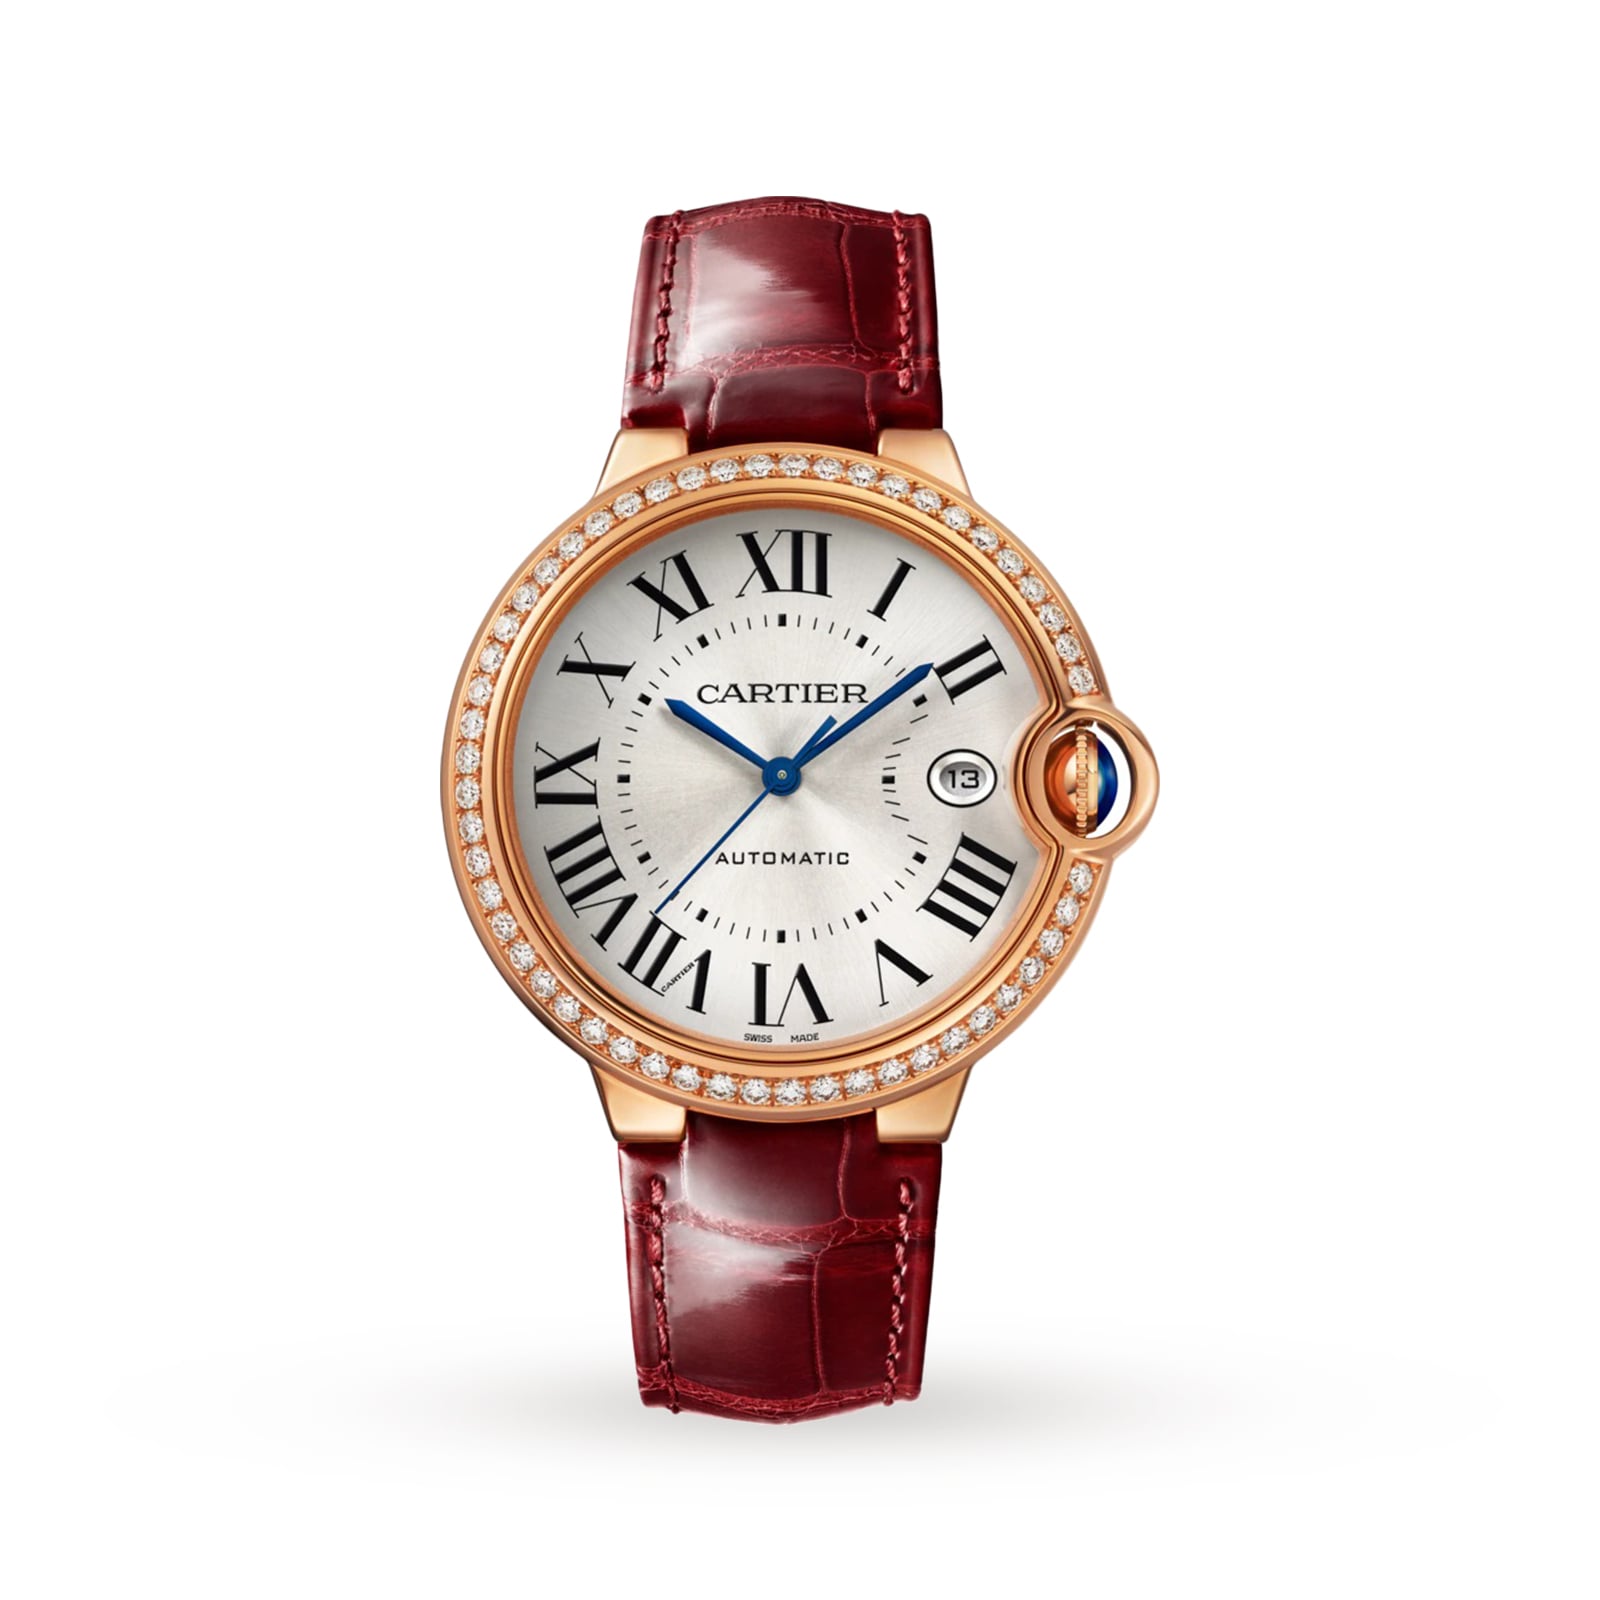 Ballon Bleu De Cartier Watch, 40mm, Automatic Movement, Rose Gold, Diamonds, Leather